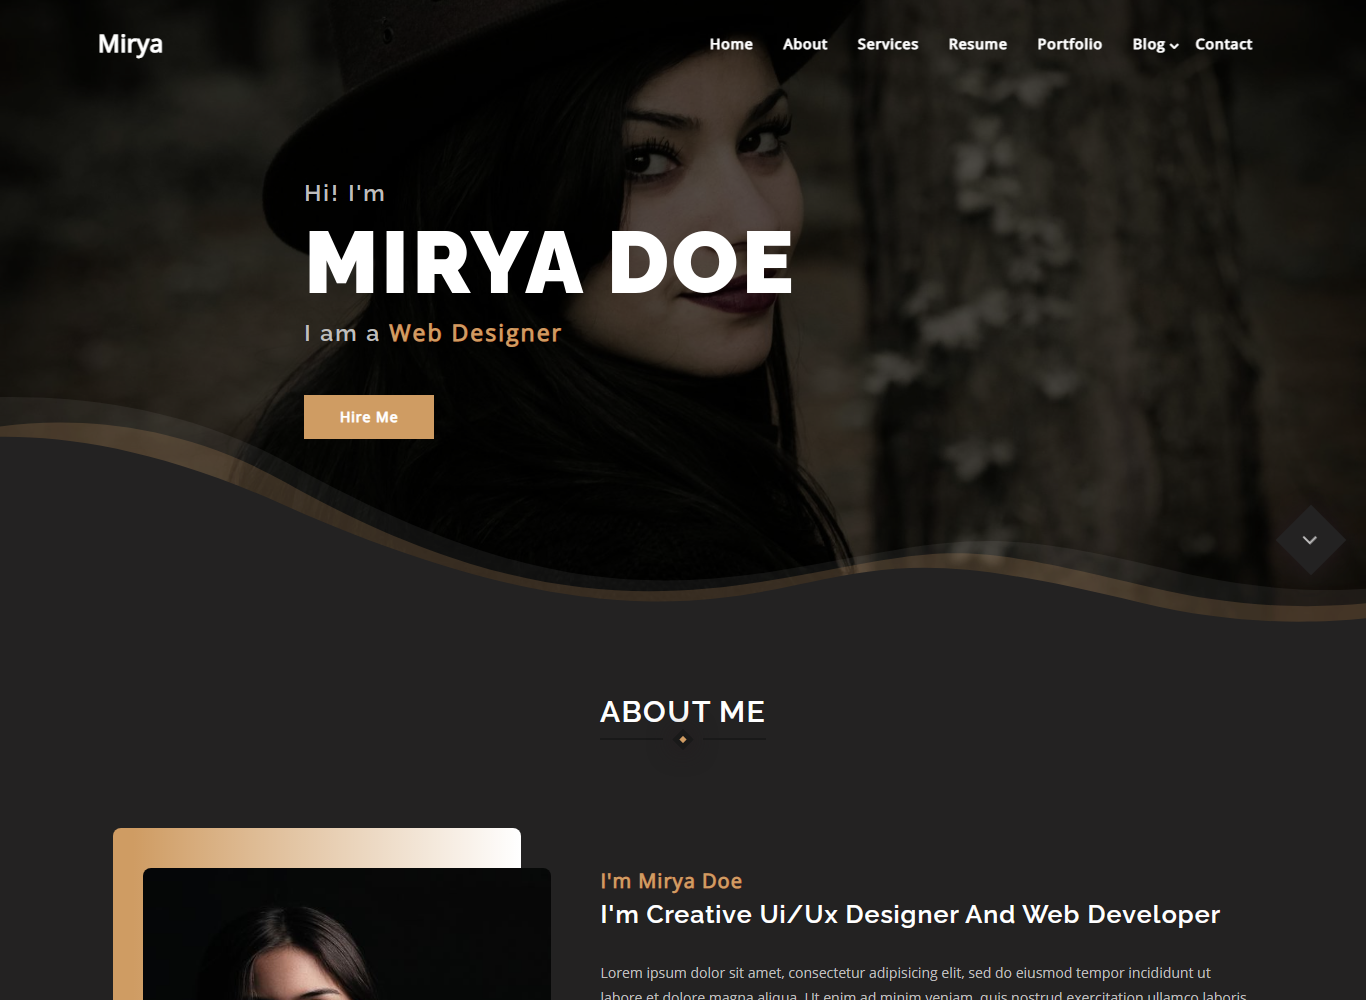 Homepage of mirya personal portfolio in dark tones.